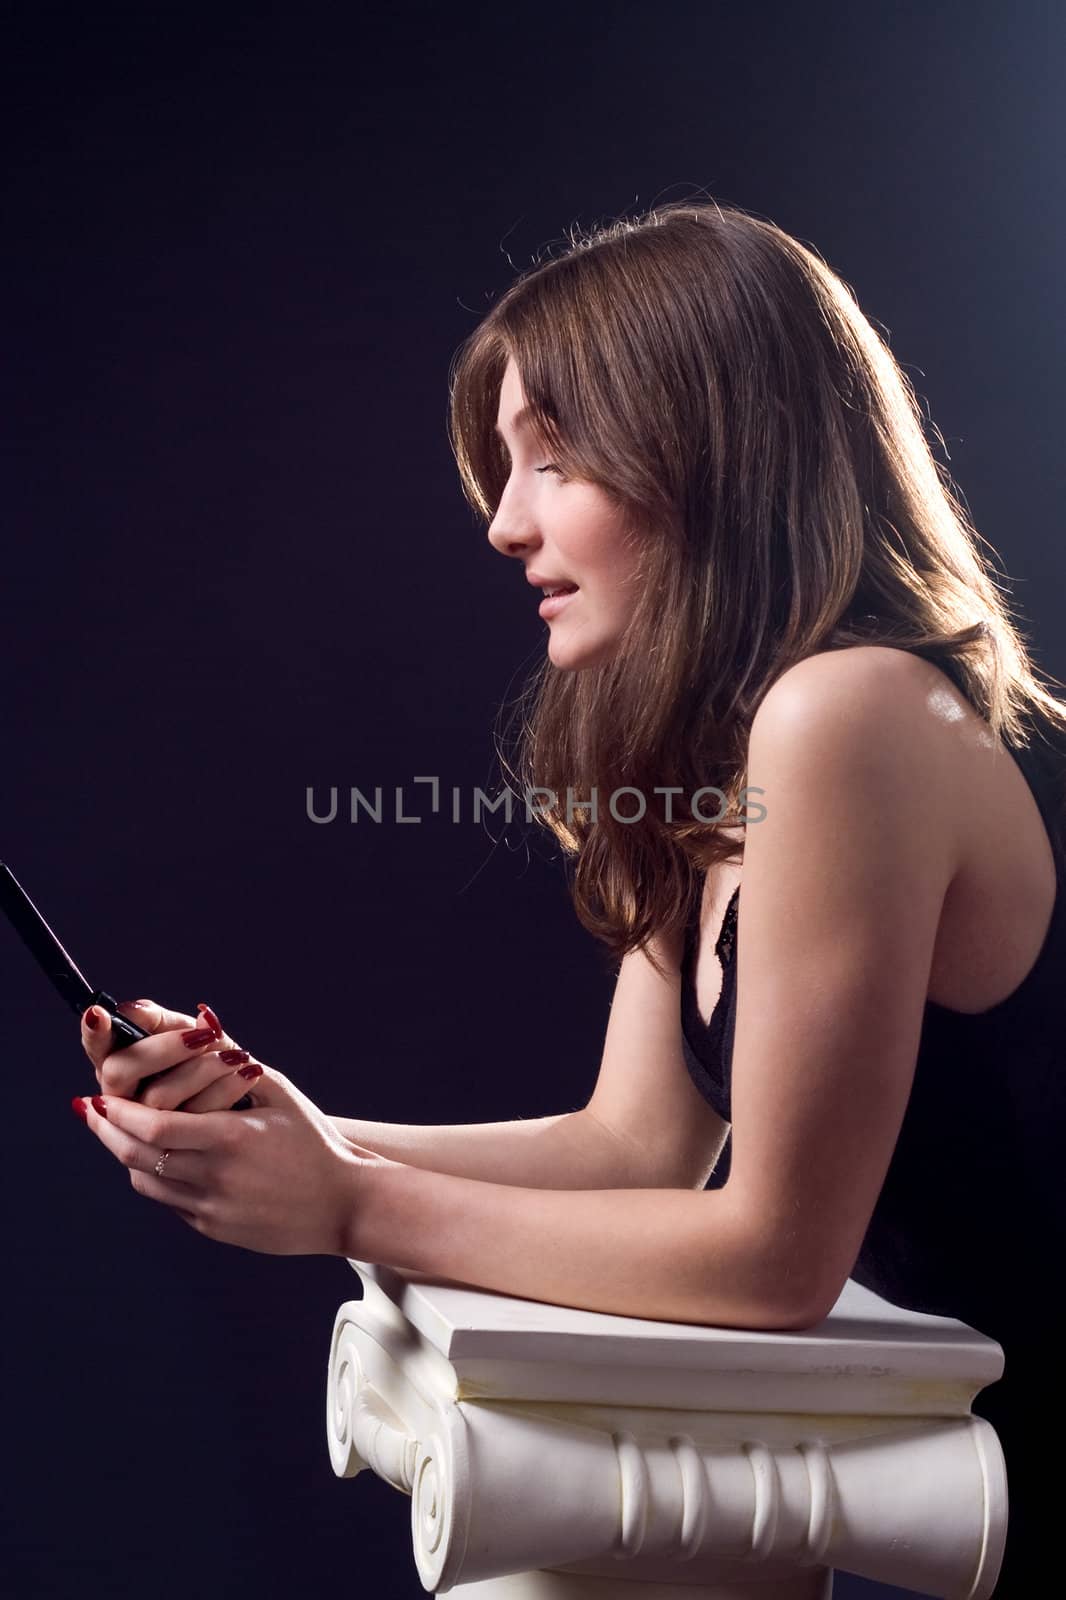 lady in black handing mobile phone
